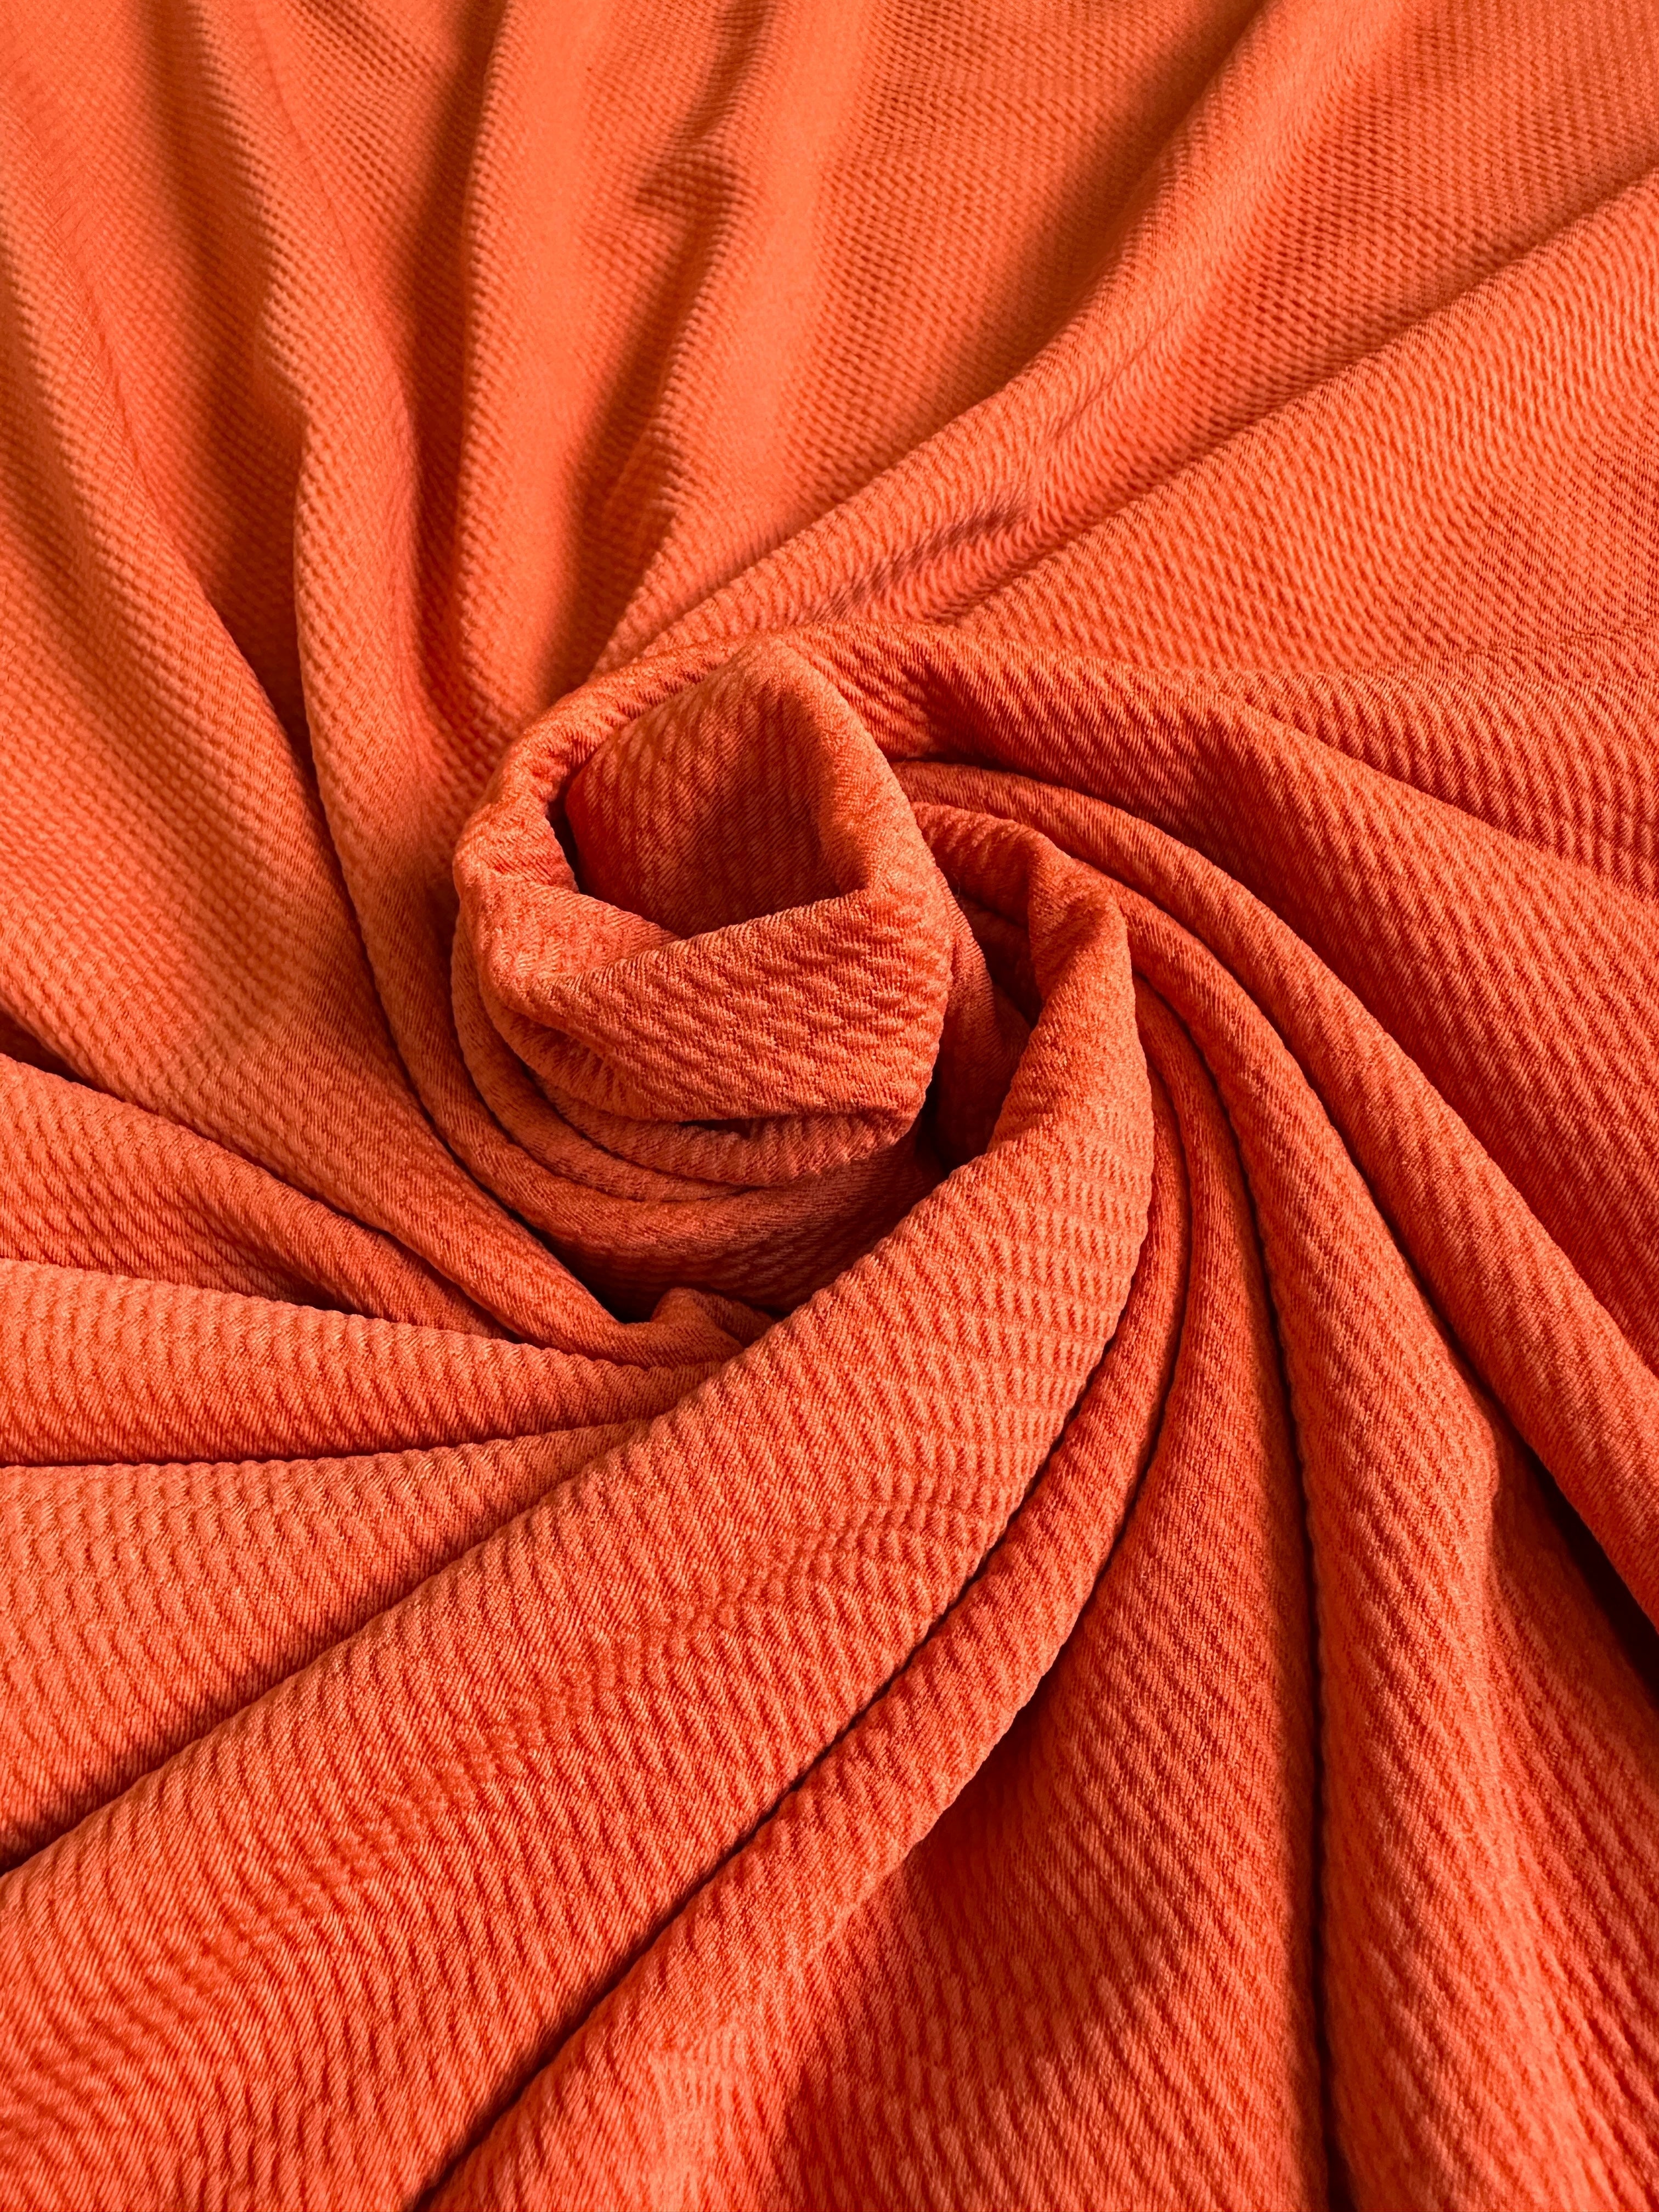 orange liverpool knit, dark orange liverpool knit, light orange liverpool knit, knit for woman, knit for bride, knit on discount, knit on sale, knit for gown, liverpool knit for party wear, premium liverpool knit, kiki textile liverpool knit